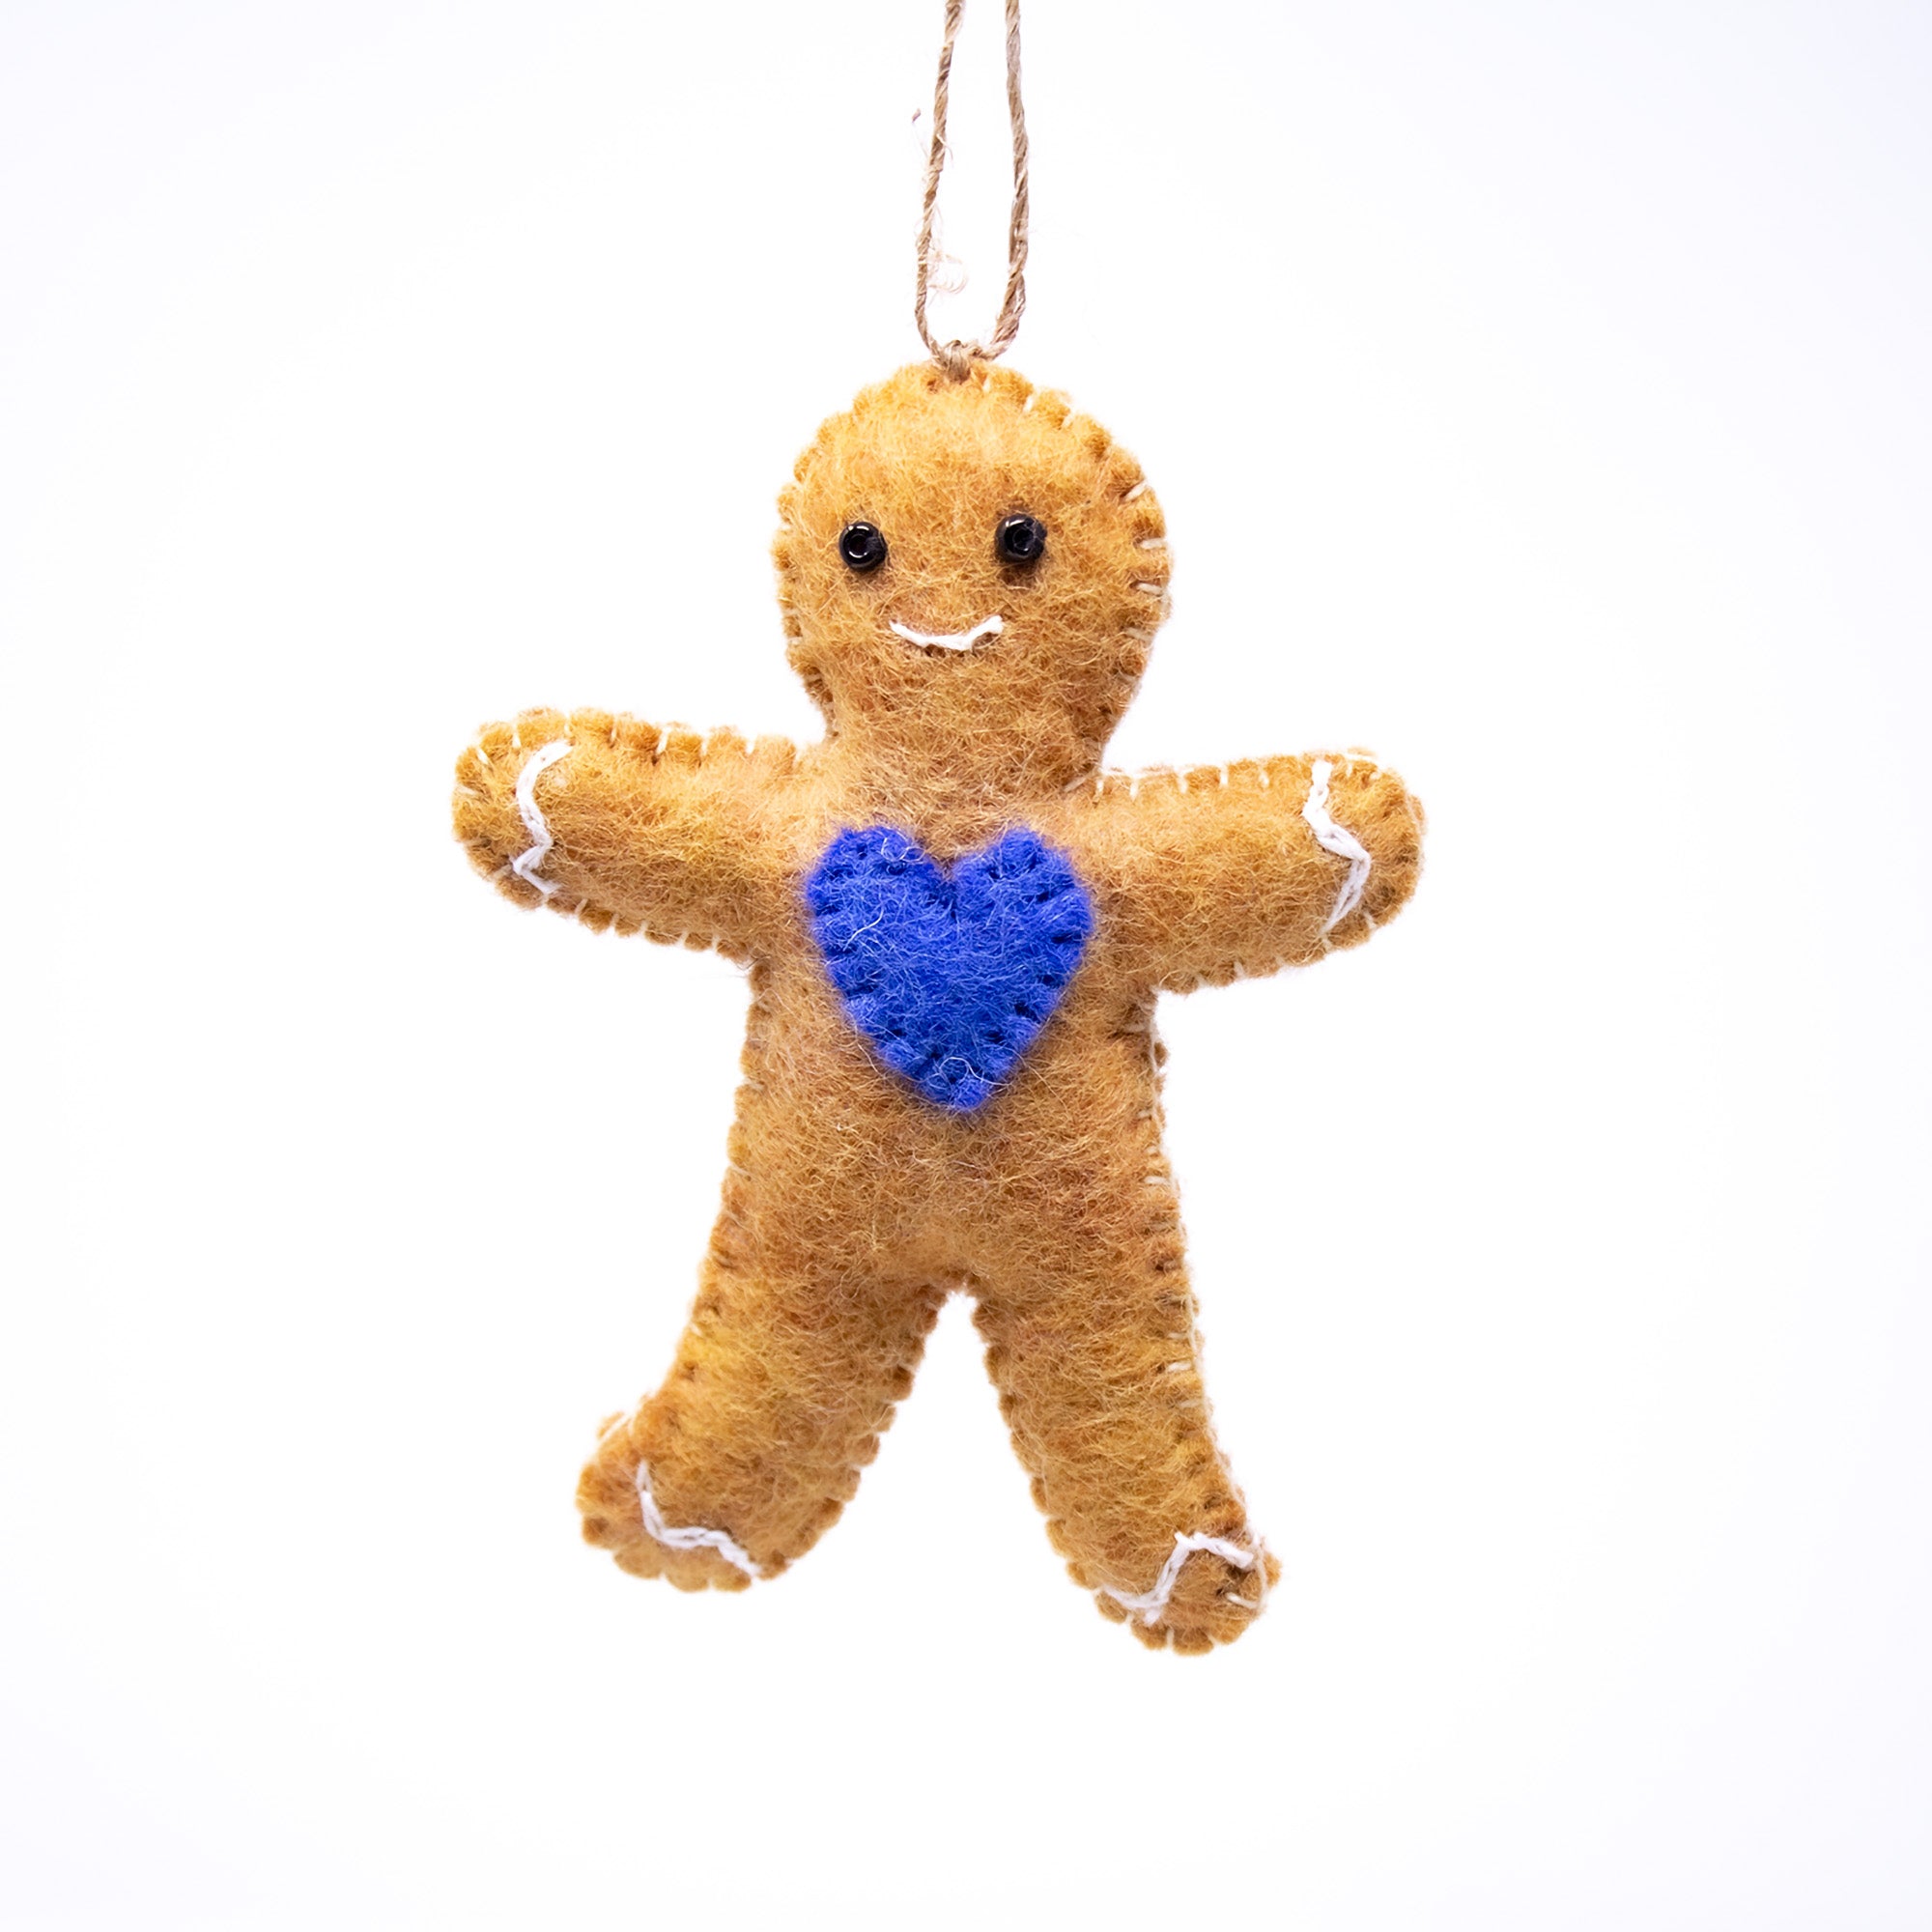 Rainbow Ginger Friend Ornament - Dark Blue Heart